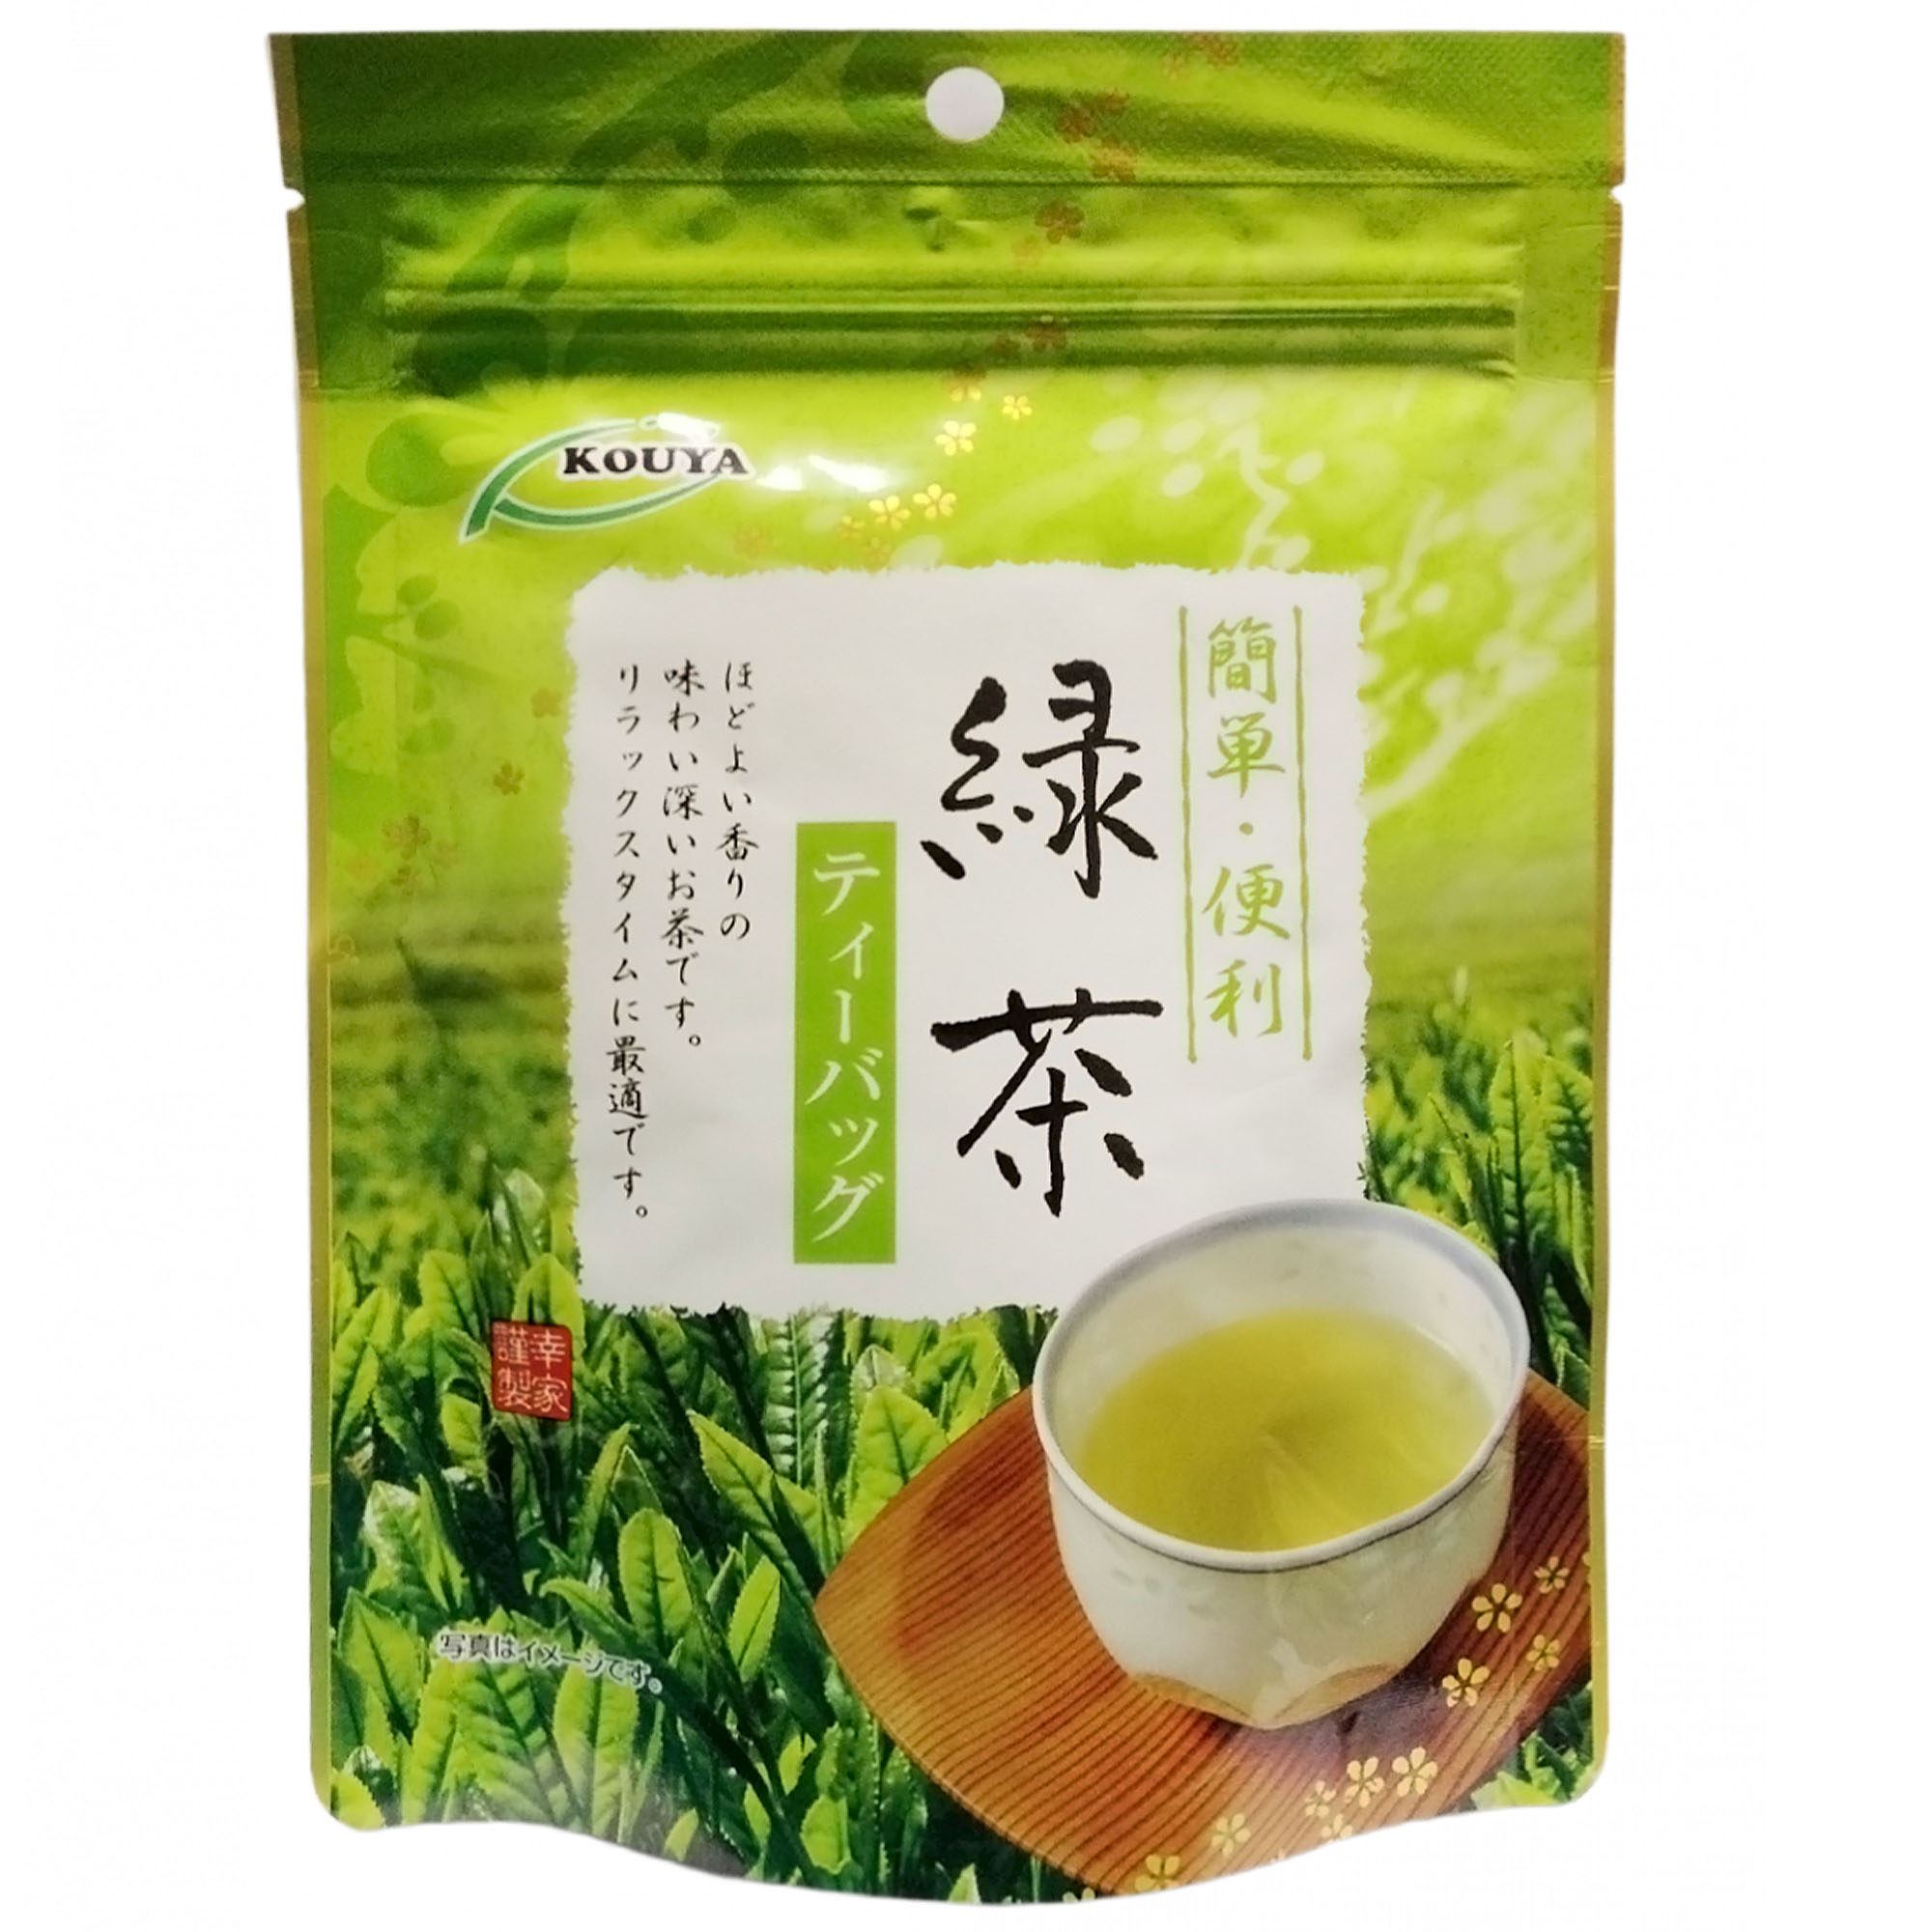 Японский зеленый чай Kouya РЁКУ-ча (15 шт), 30 г чай зеленый моли хуа ча премиум 100 г